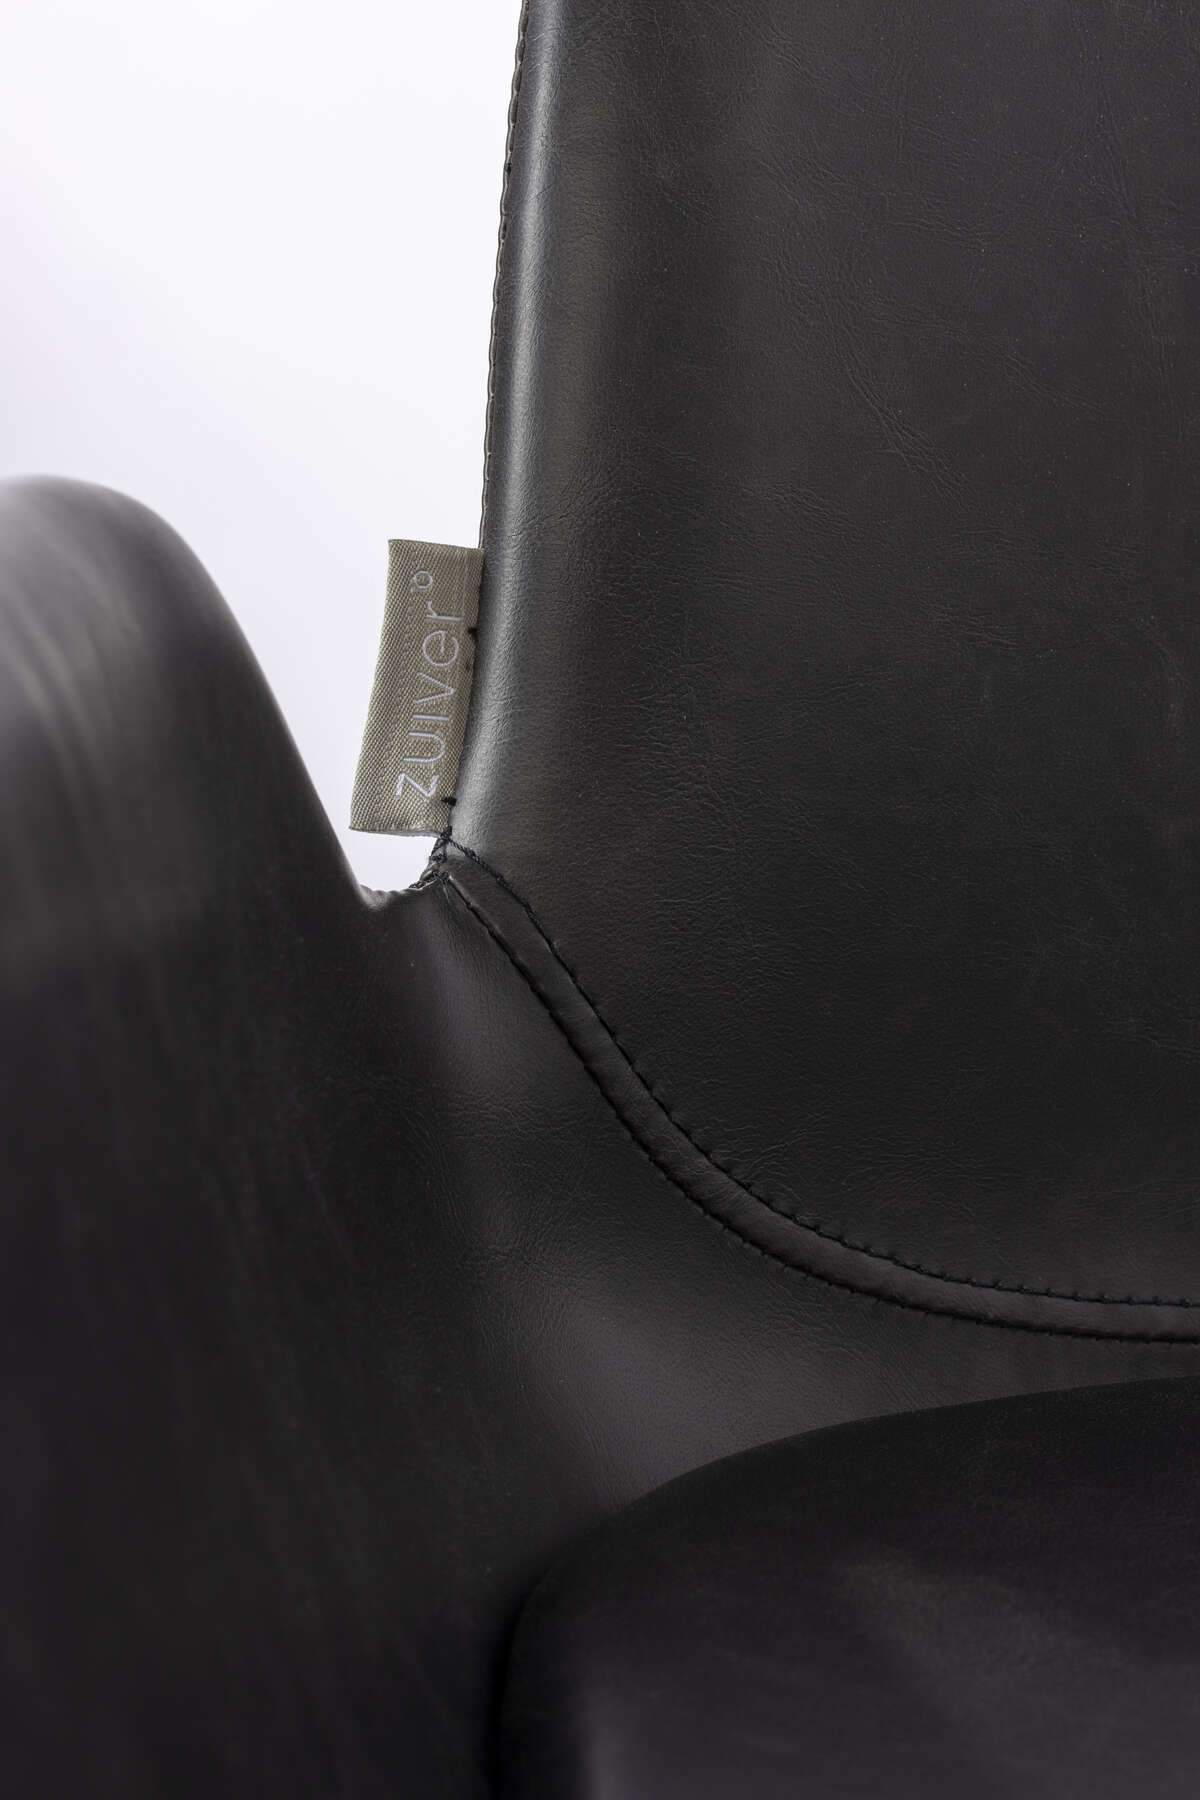 Bar chair BRIT eco leather black